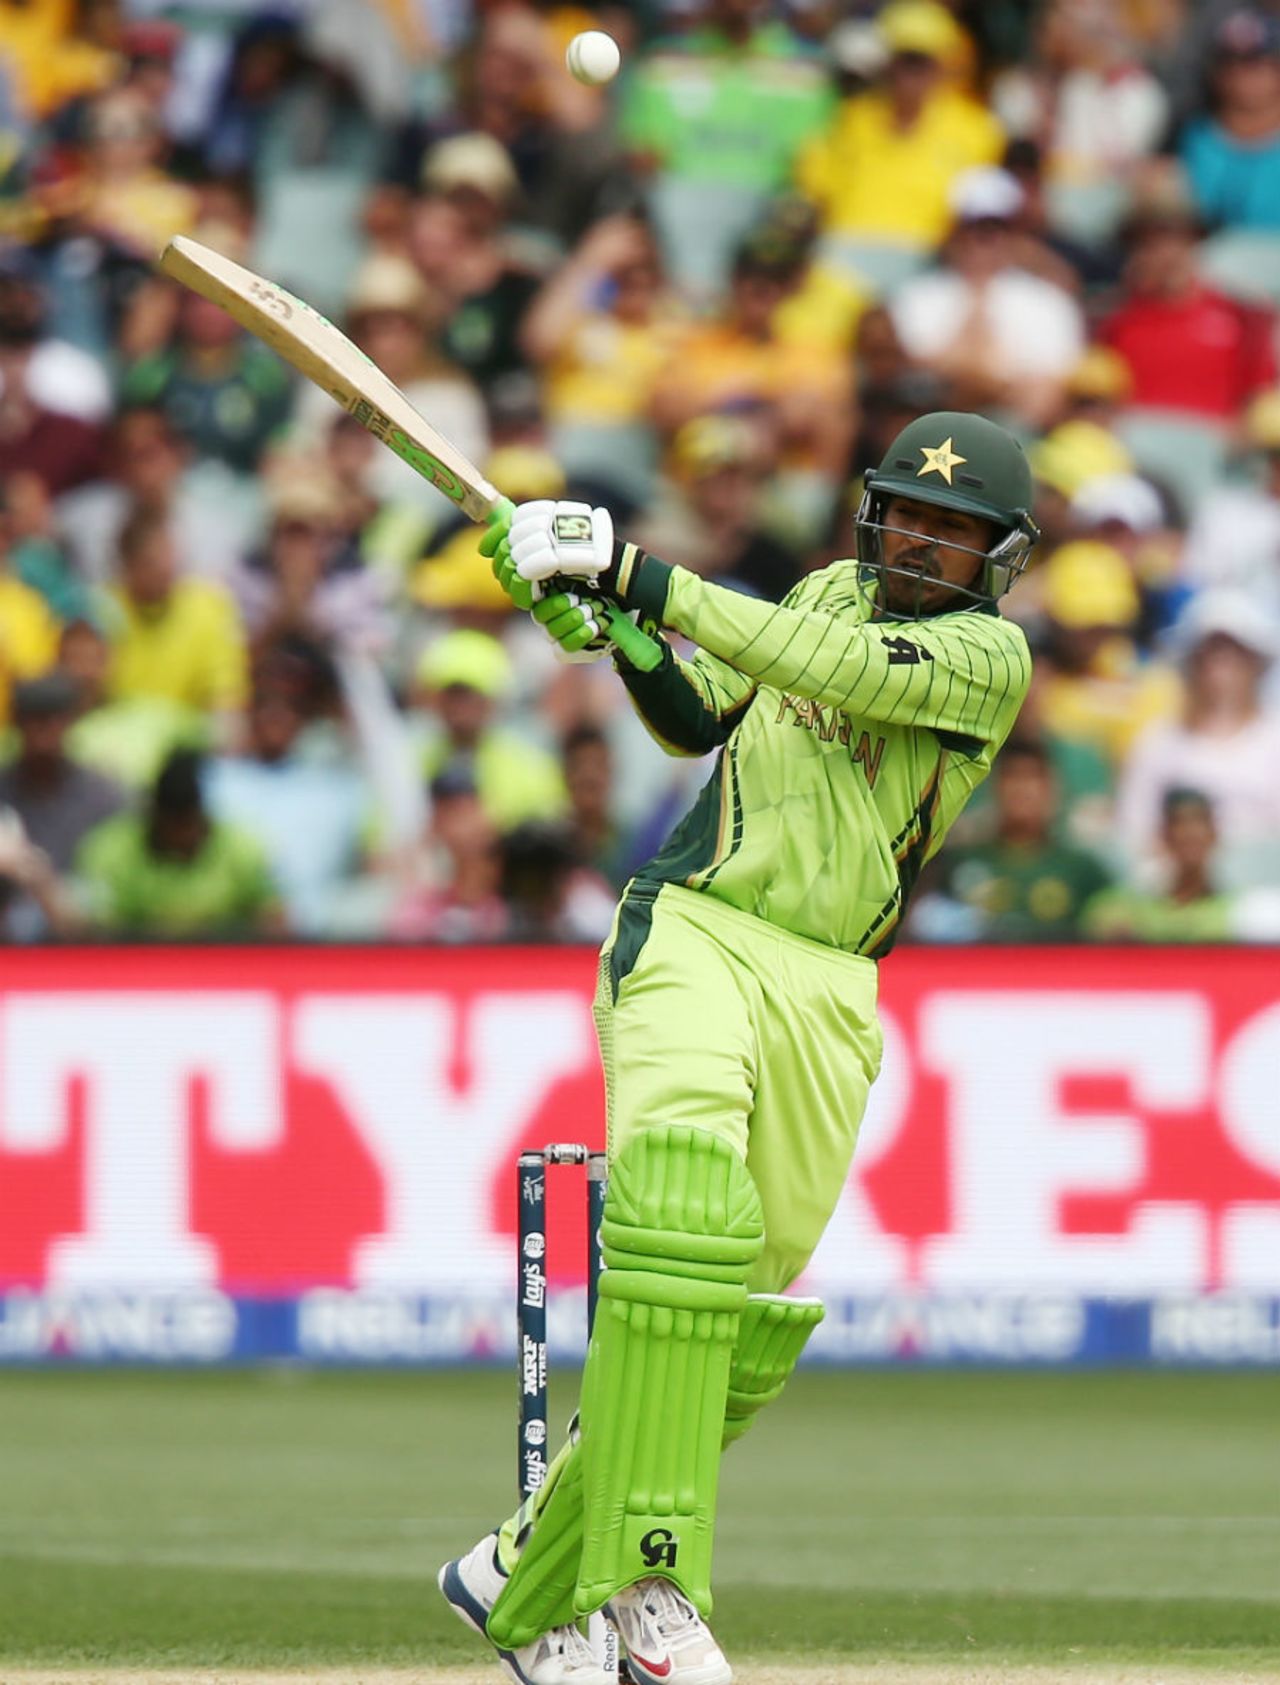 Haris Sohail pulls the ball, Australia v Pakistan, World Cup 2015, 3rd quarter-final, Adelaide, March 20, 2015